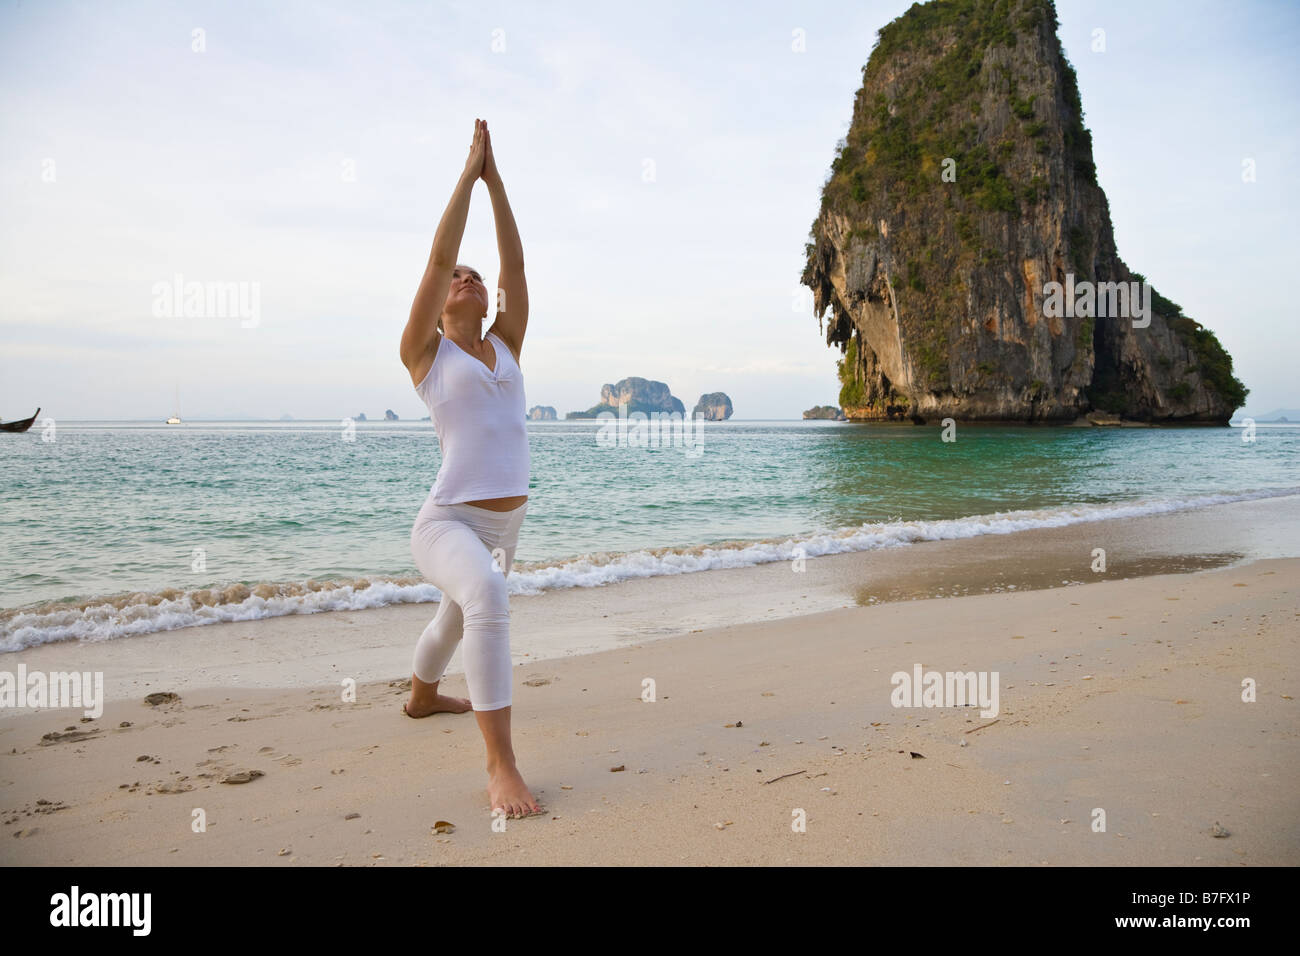 Yoga, Beach, Warrior pose, Balance, Calm, Meditation, Relax, healthy lifestyle, Health, wellbeing, revive, revitalise, breath, Stock Photo